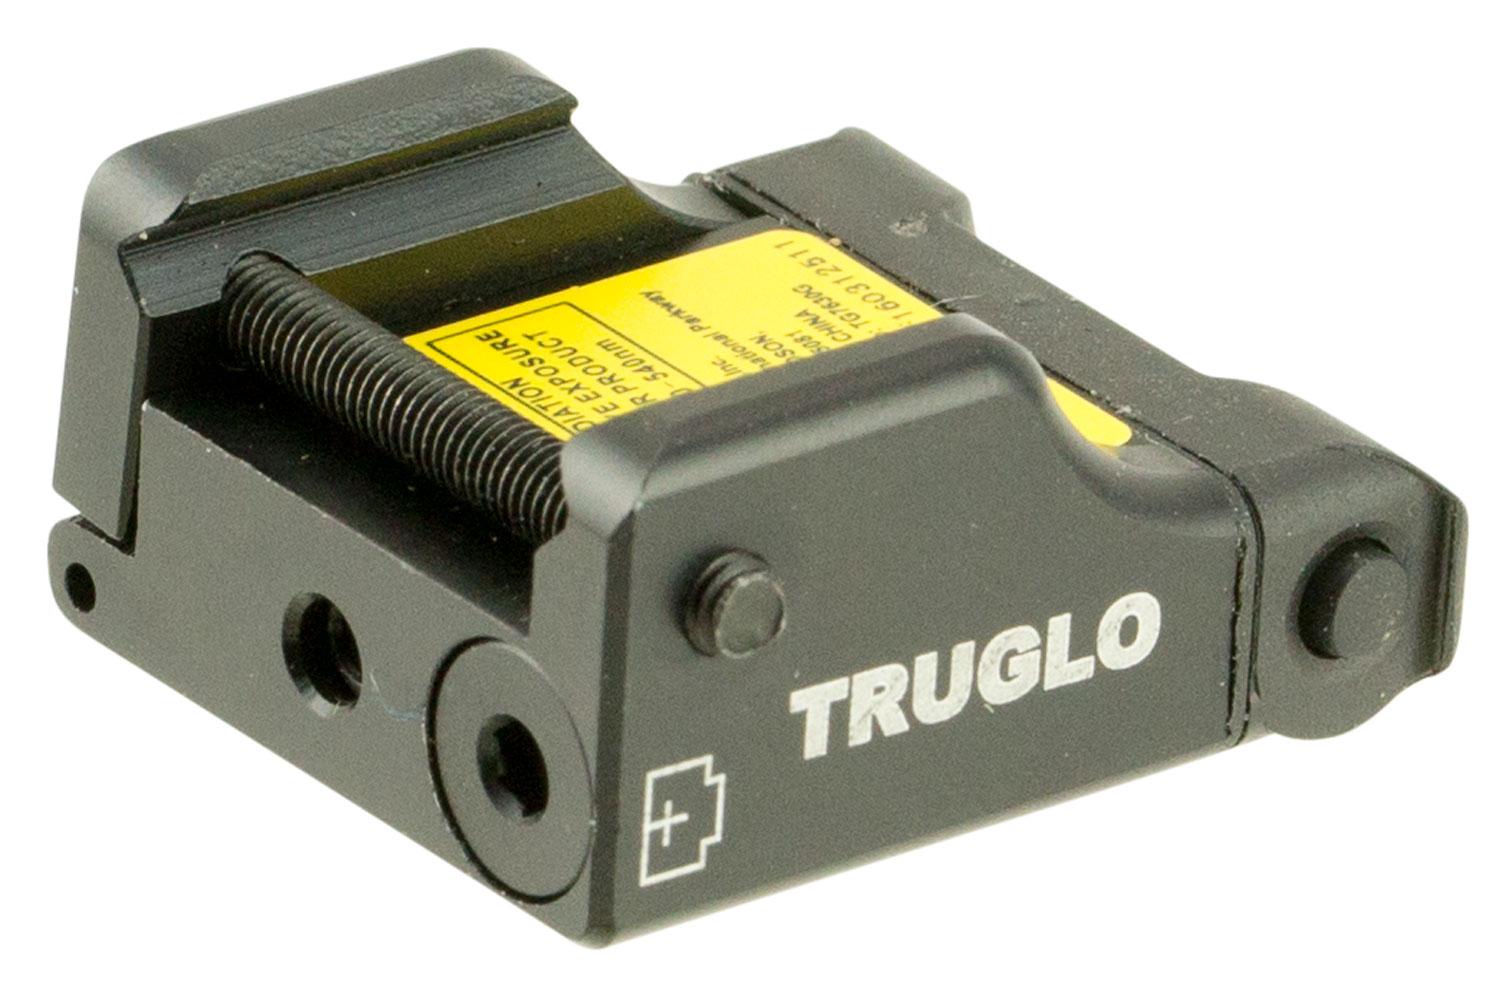 TRUGLO TG7630G Handgun Micro Green Laser Sight for sale online 